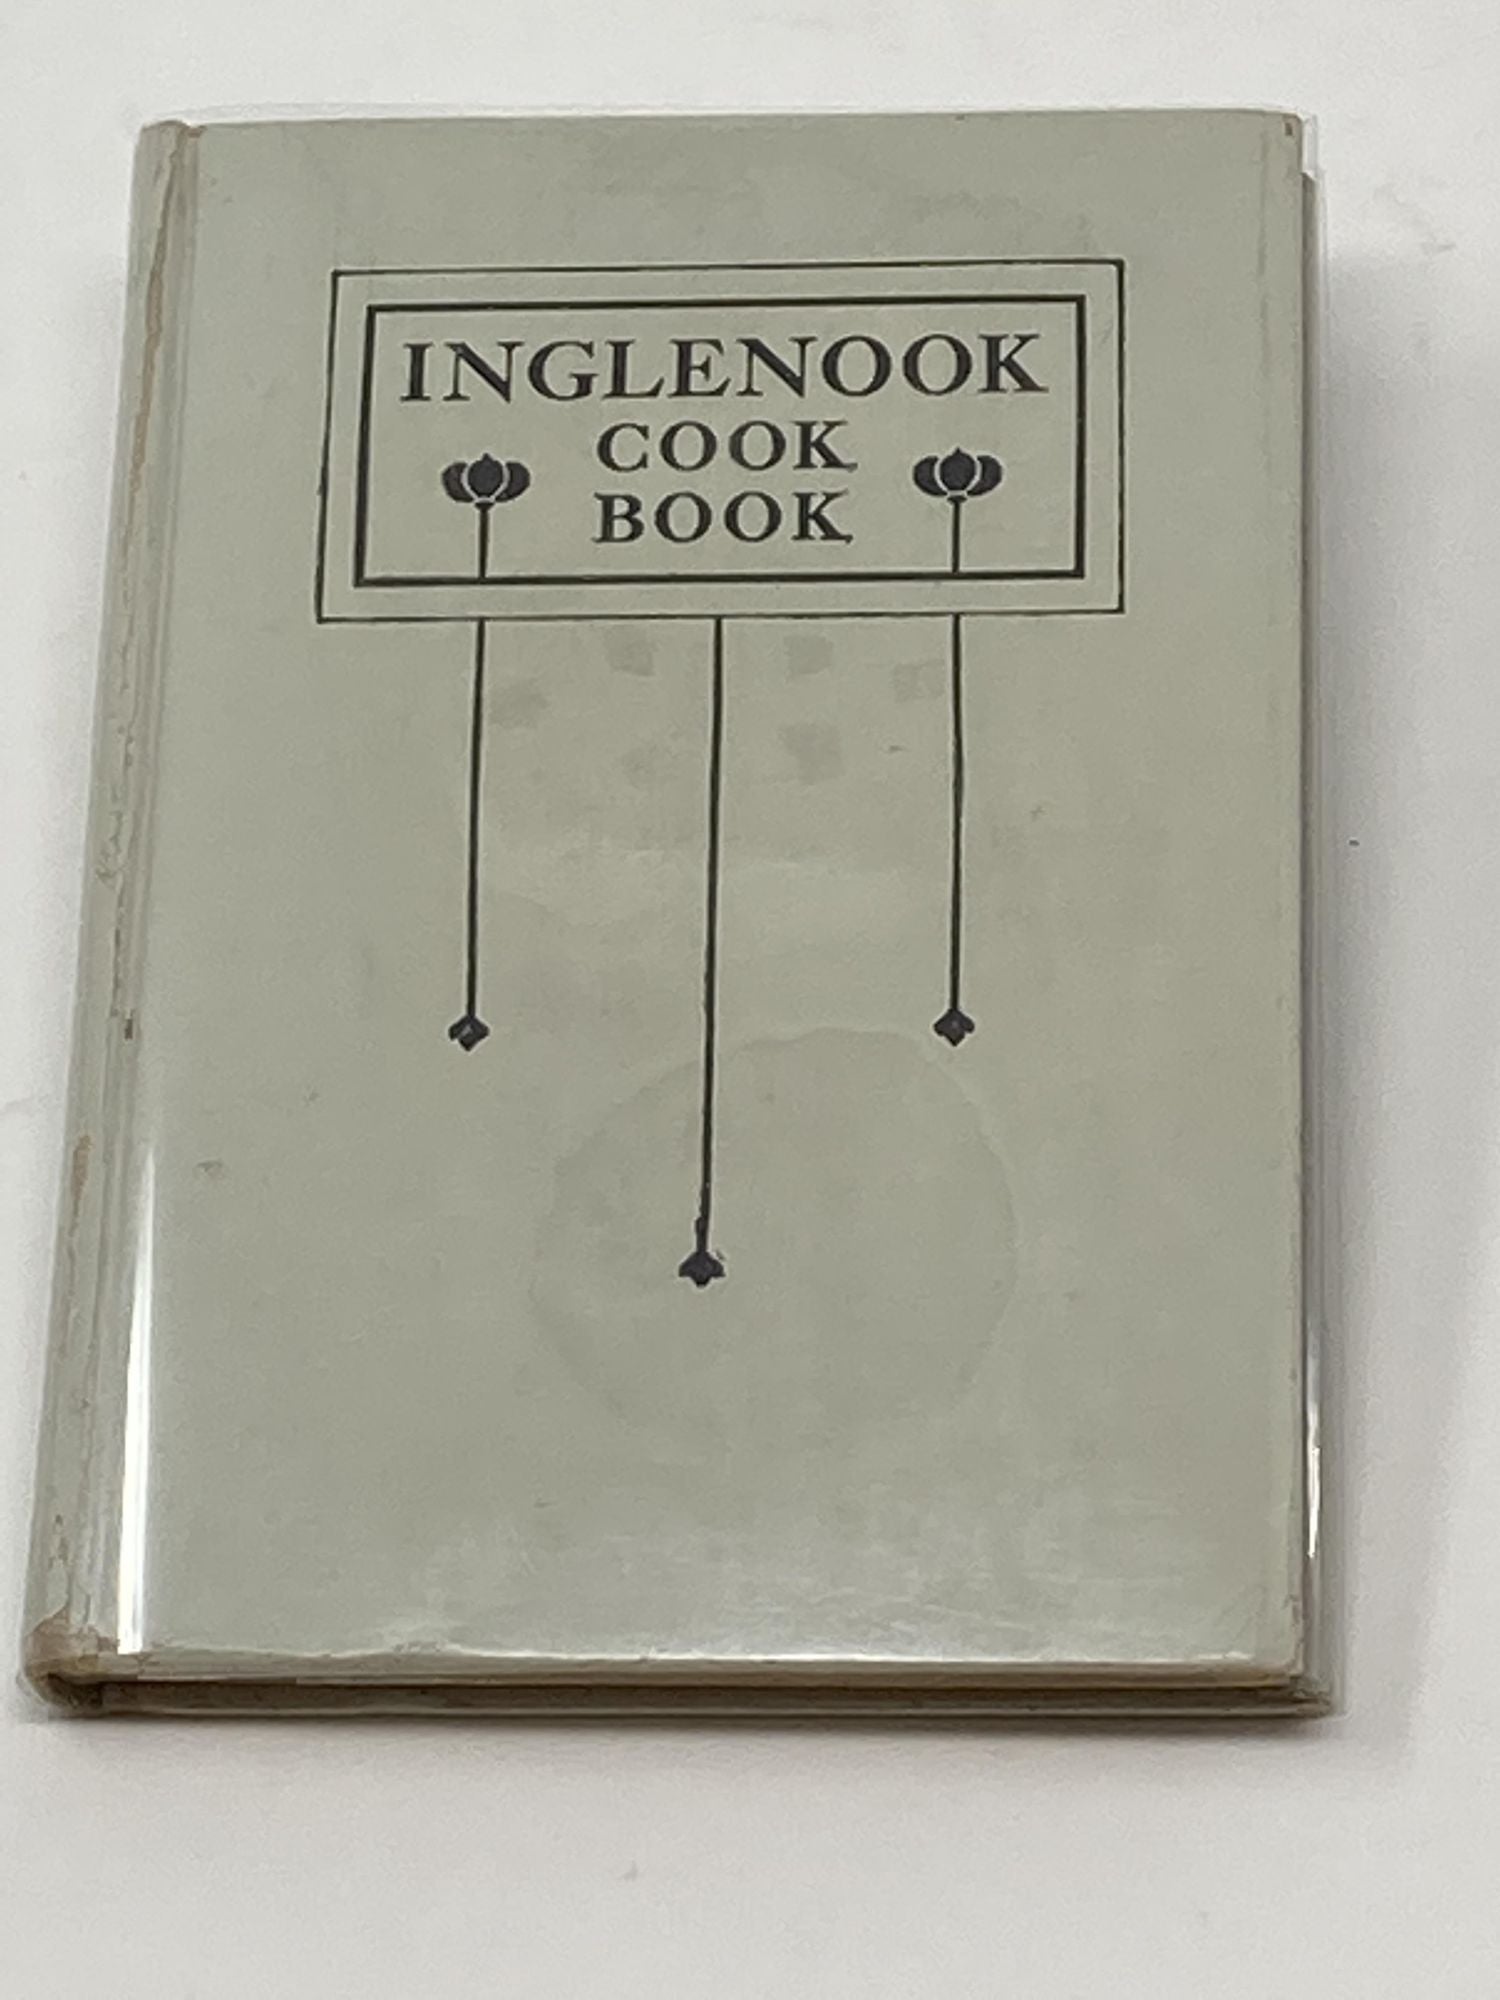 Sisters of the Brethren Church - Inglenook Cookbook